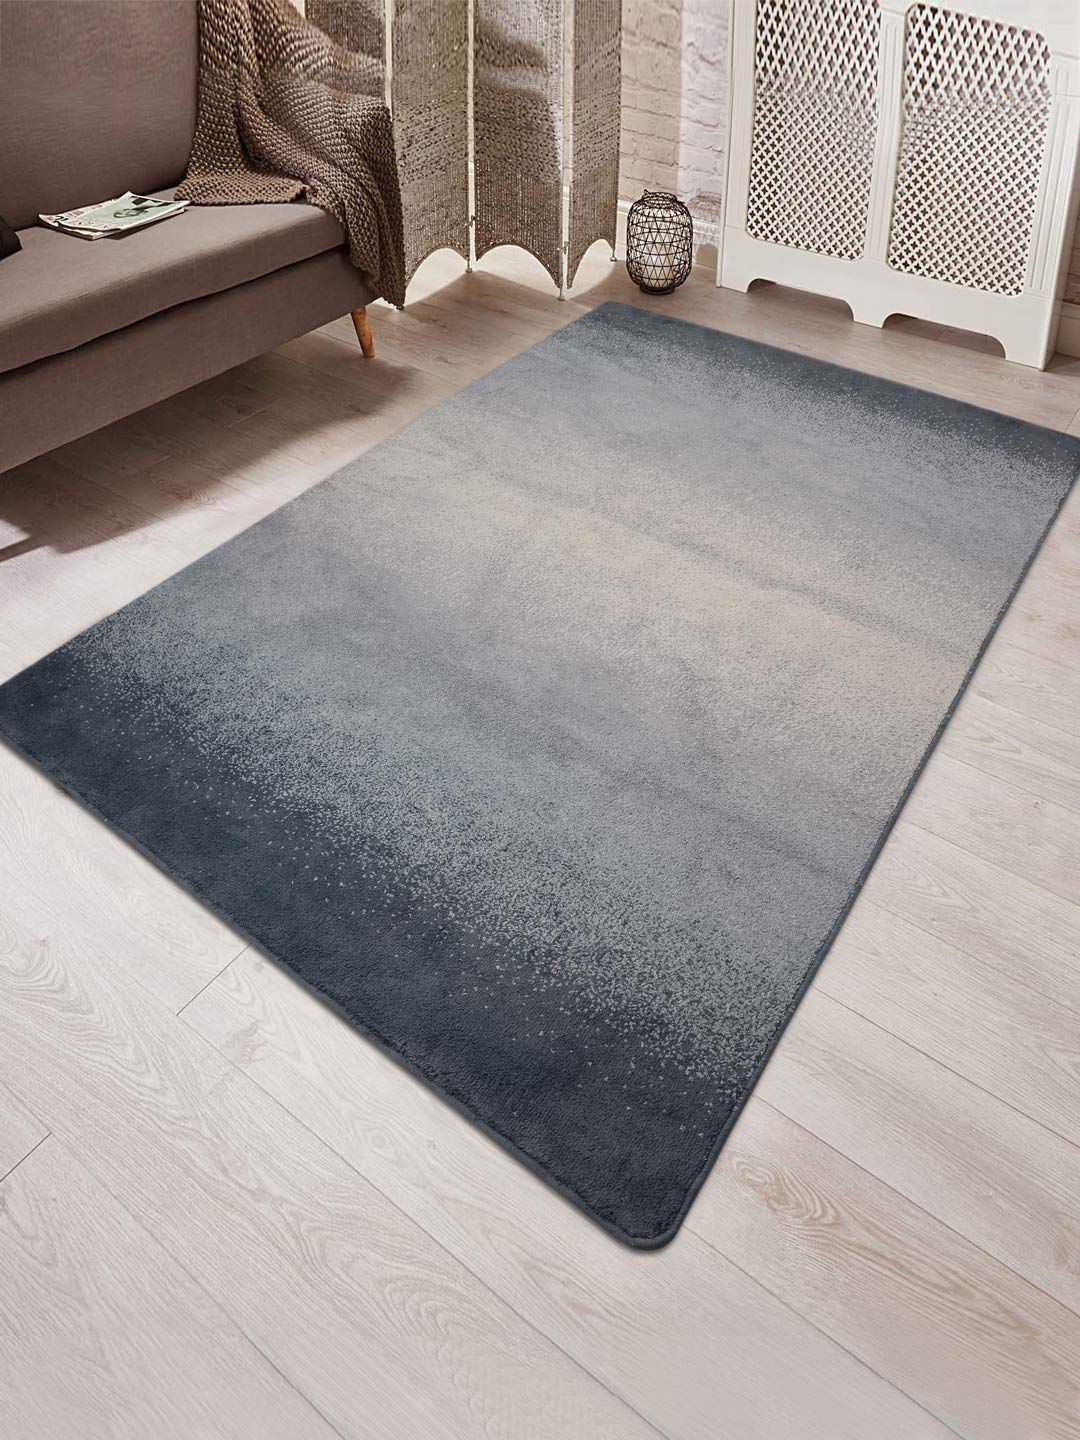 Saral Home Grey Aeon Design Soft Microfiber Anti Skid Carpet Price in India